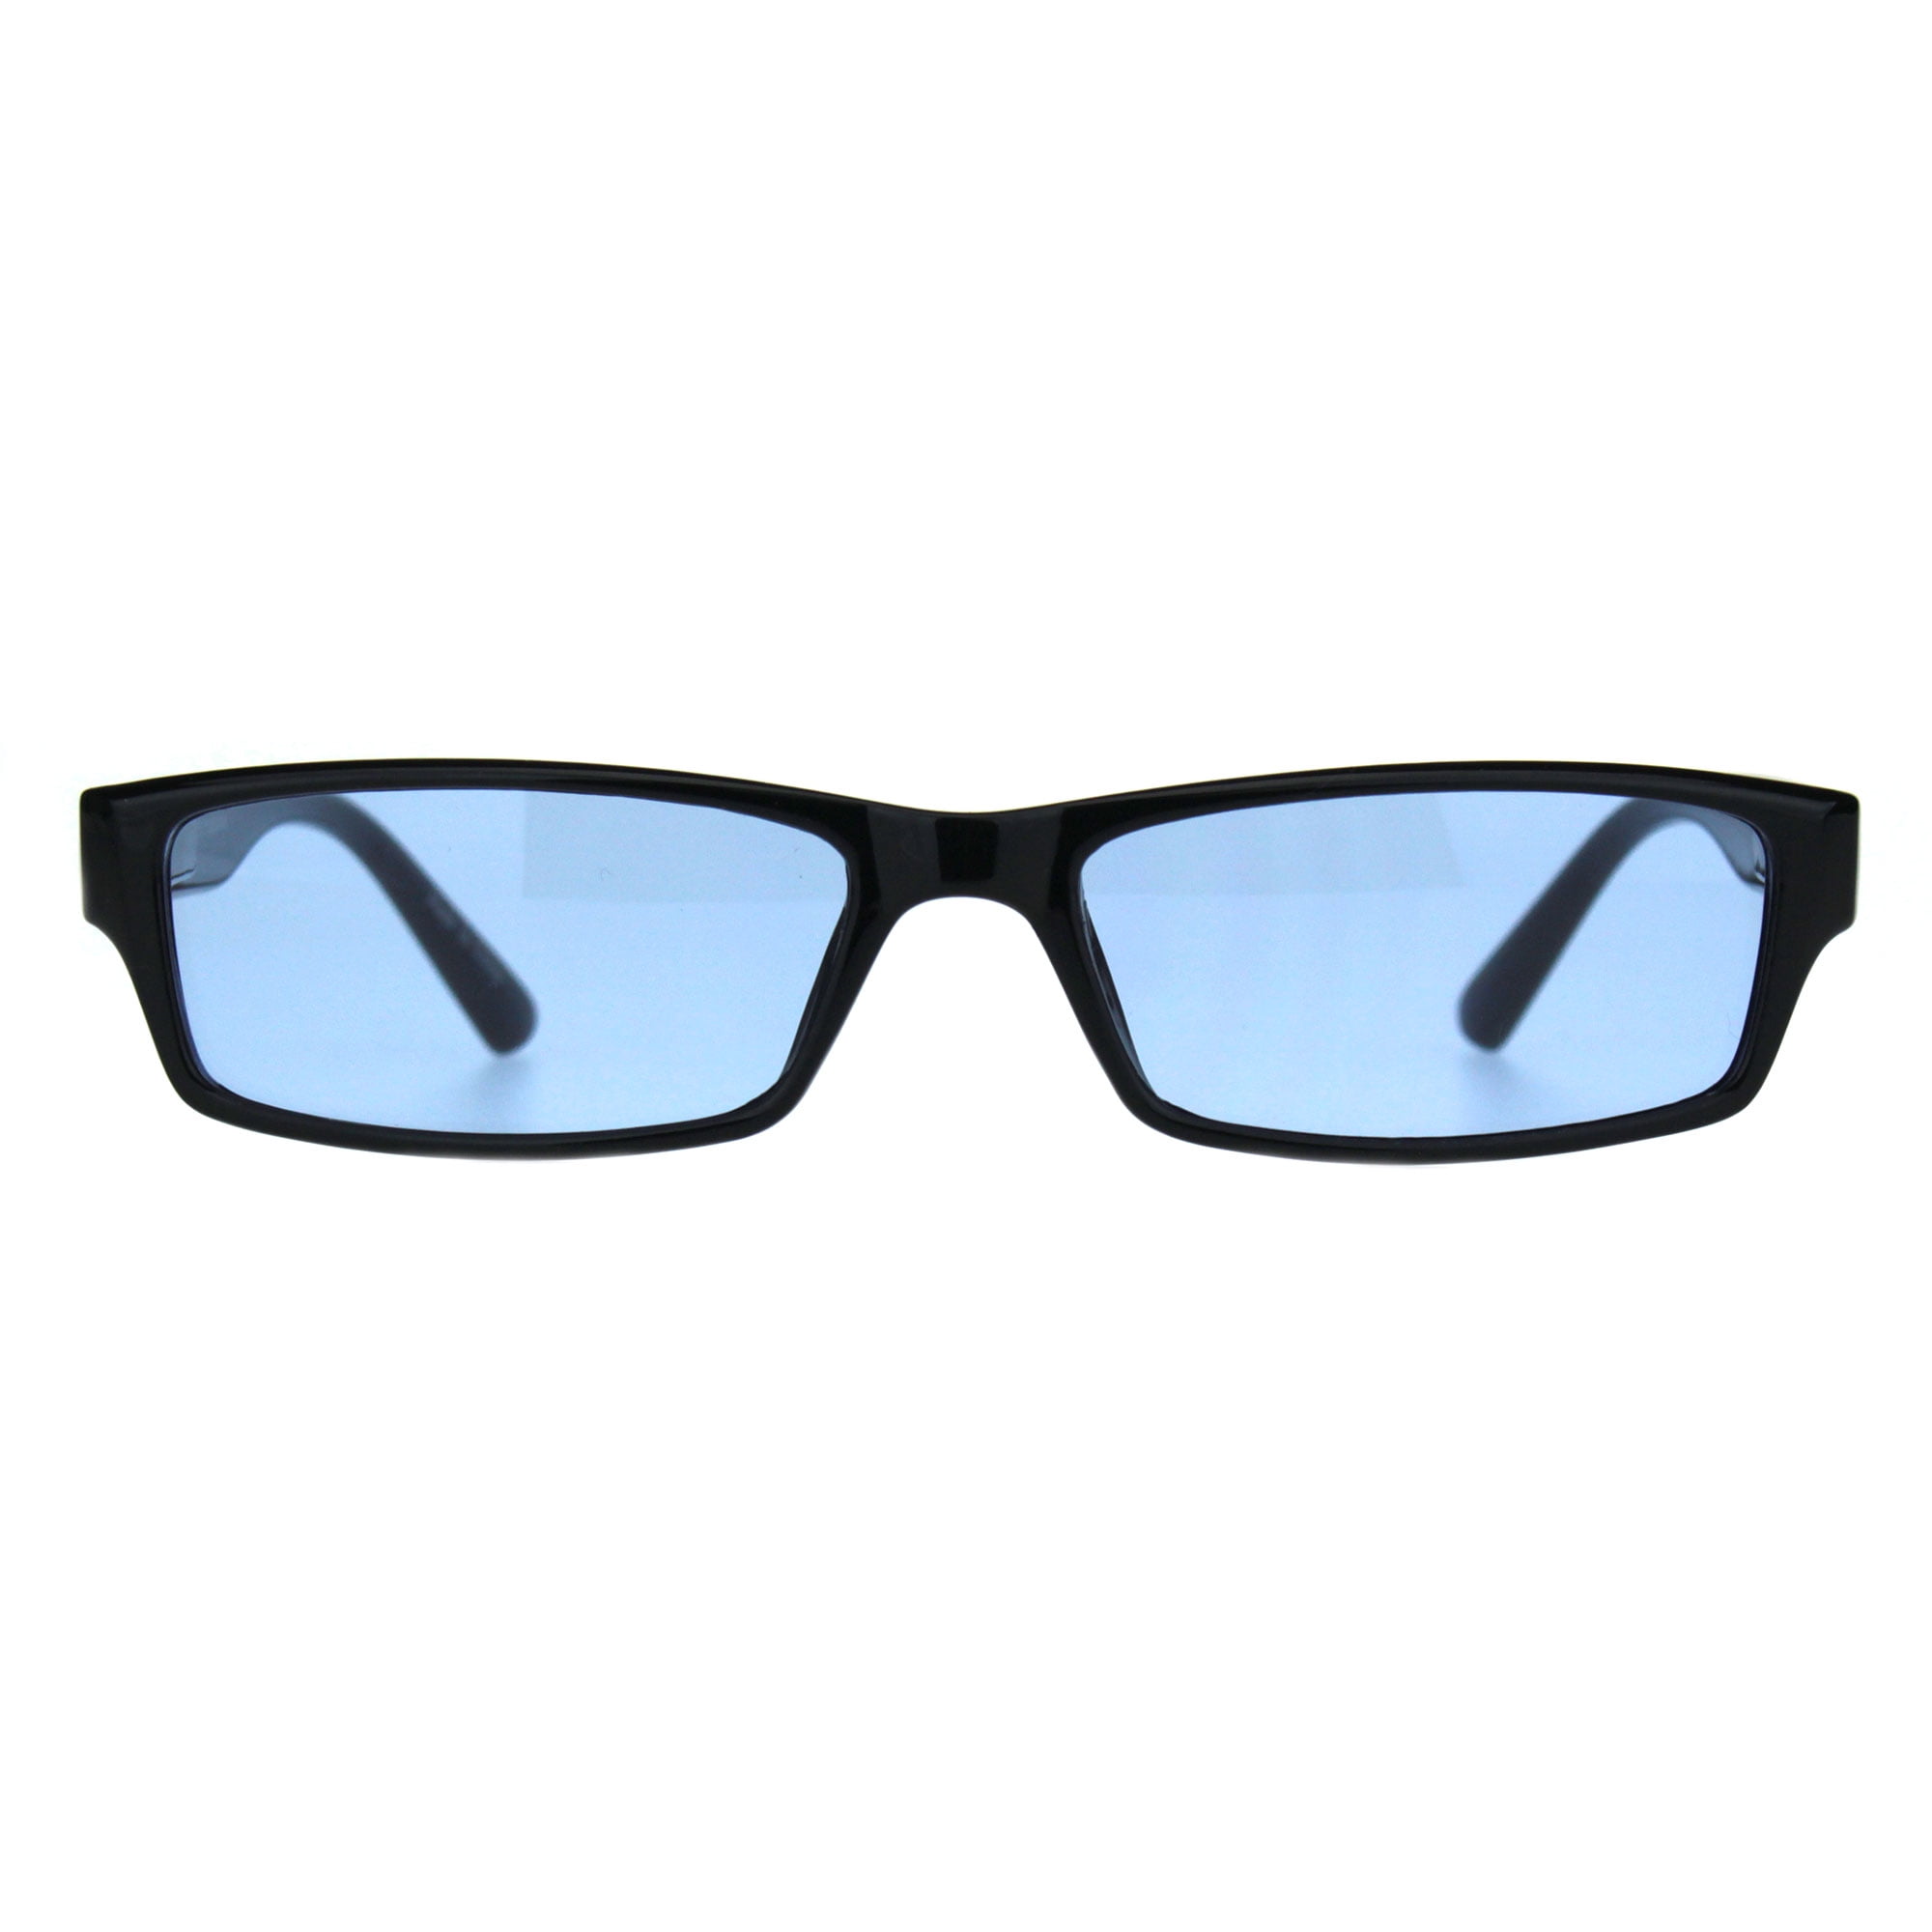 NICHE SUNGLASSES Oversized Sunglasses for Men Square Metal Frame UV Lens Fashion 